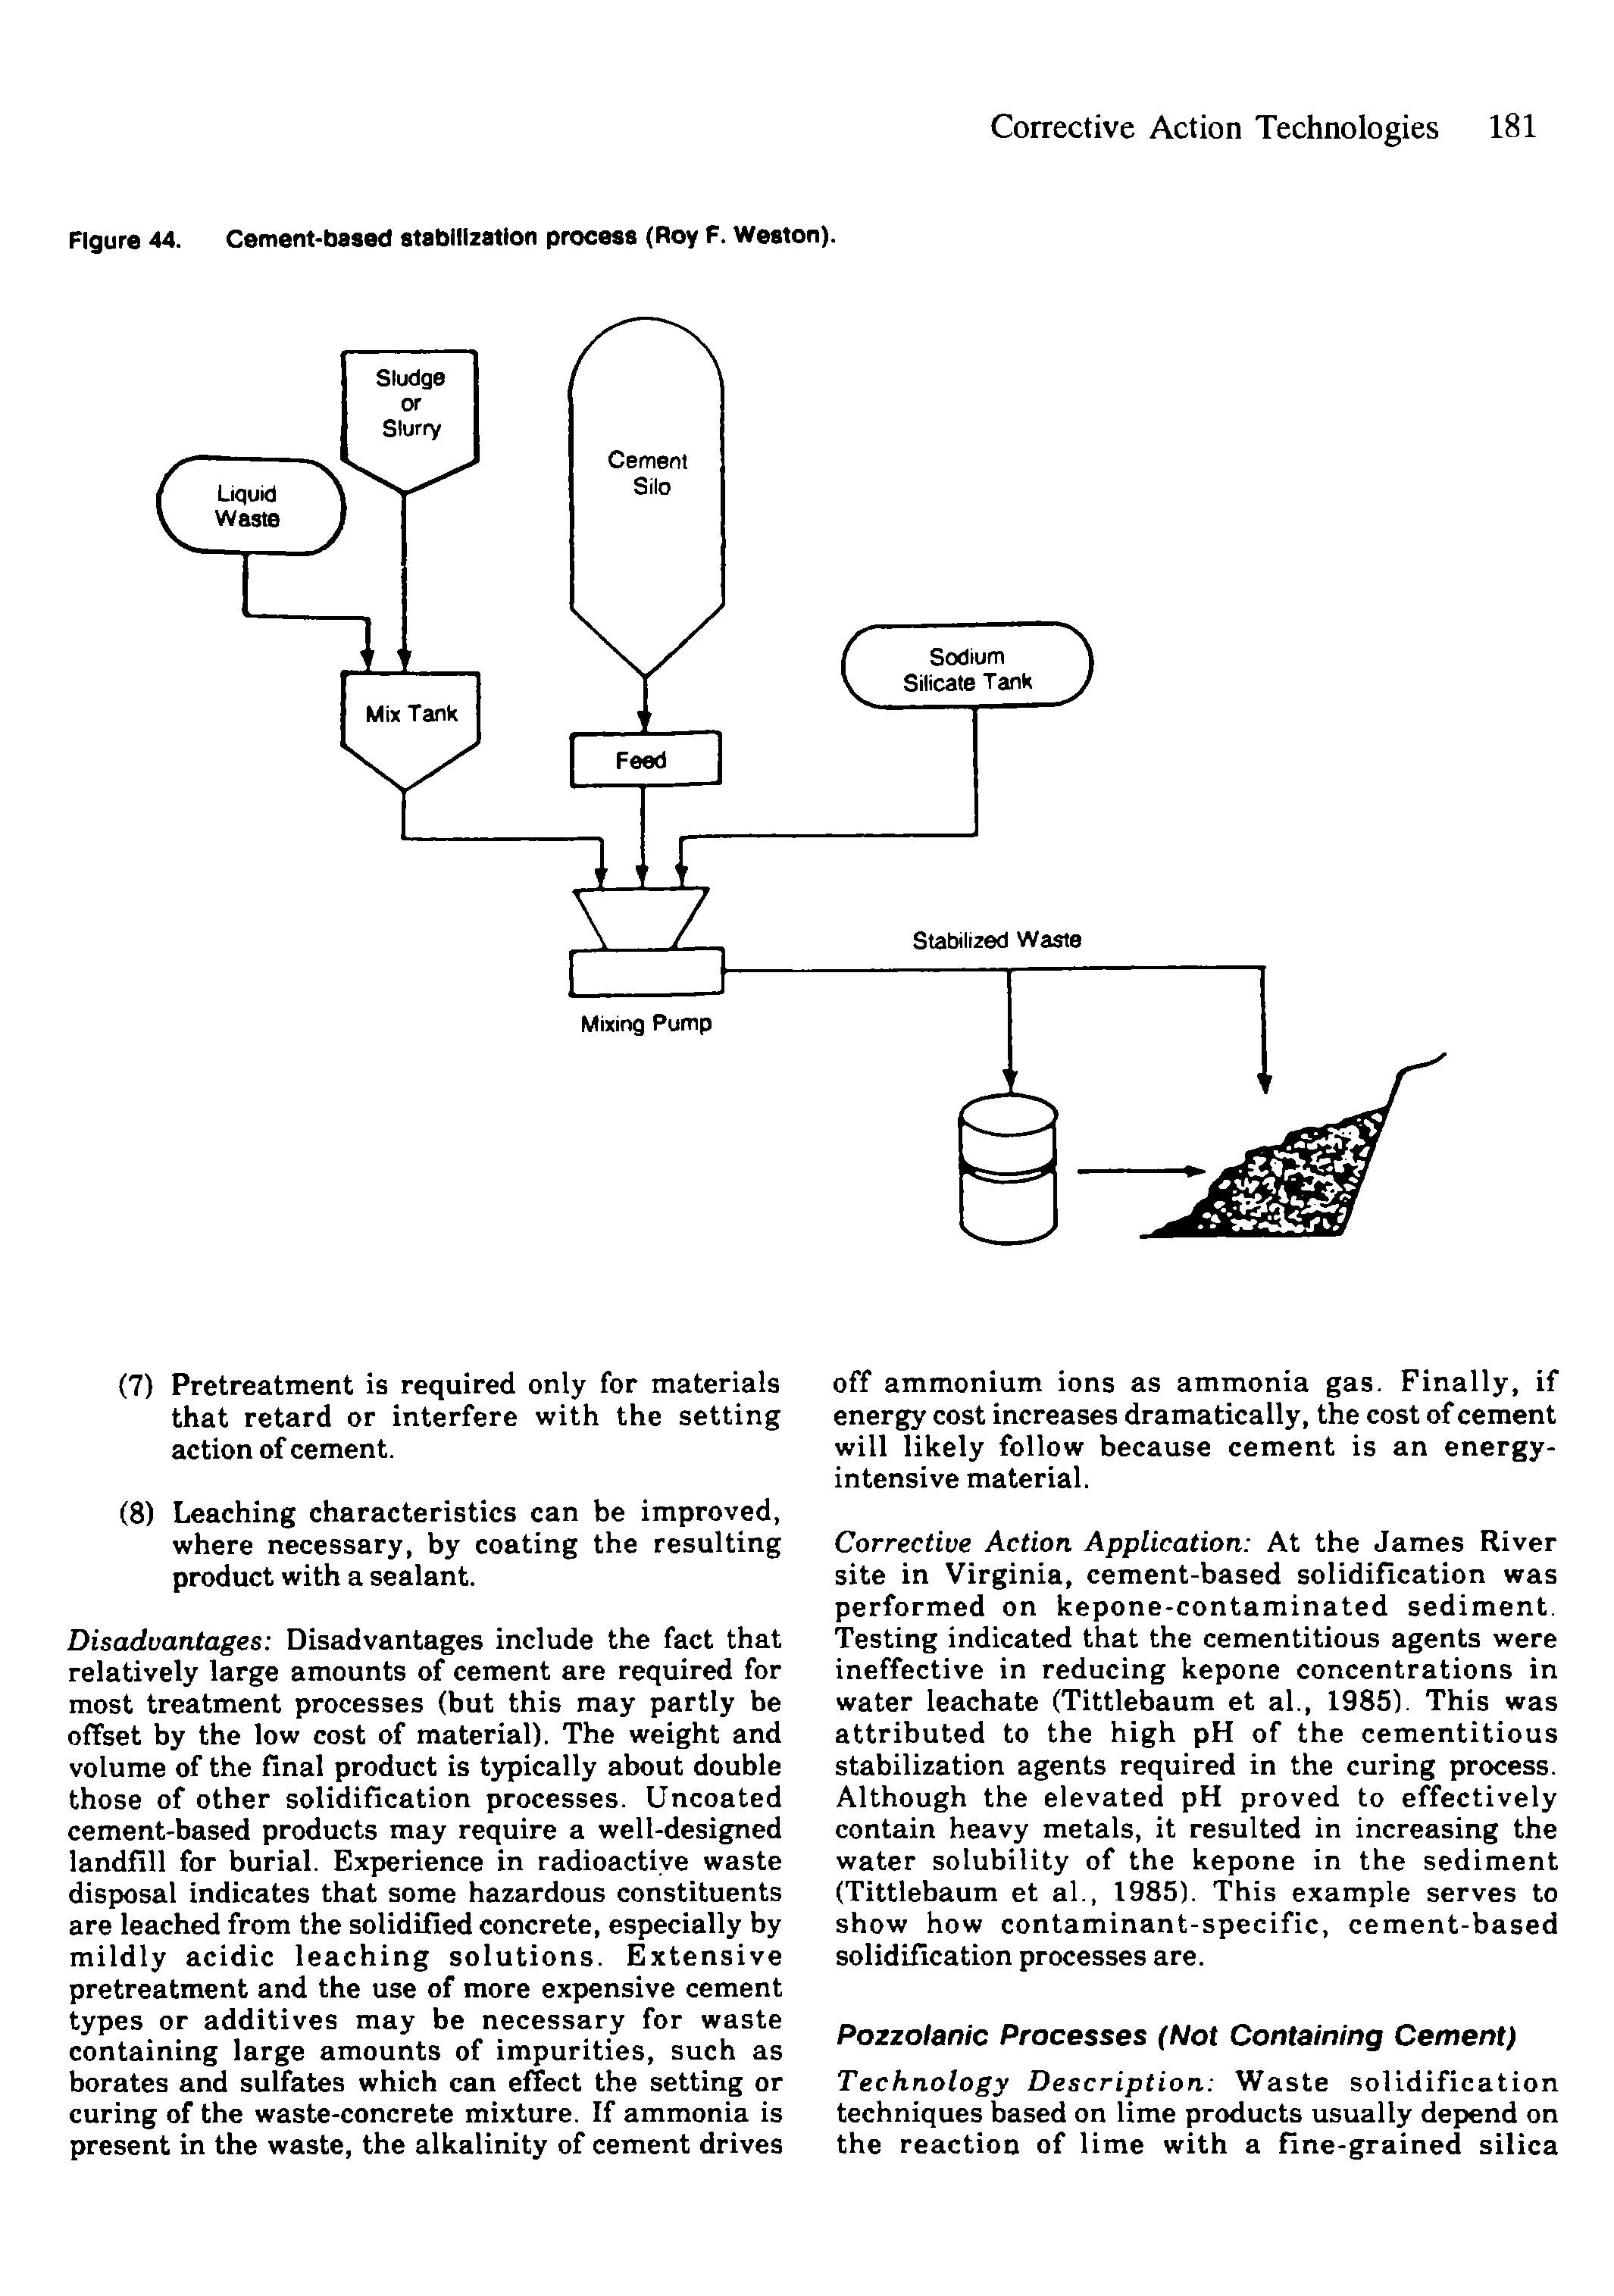 Figure 44. Cement-based stabilization process (Roy F. Weston).